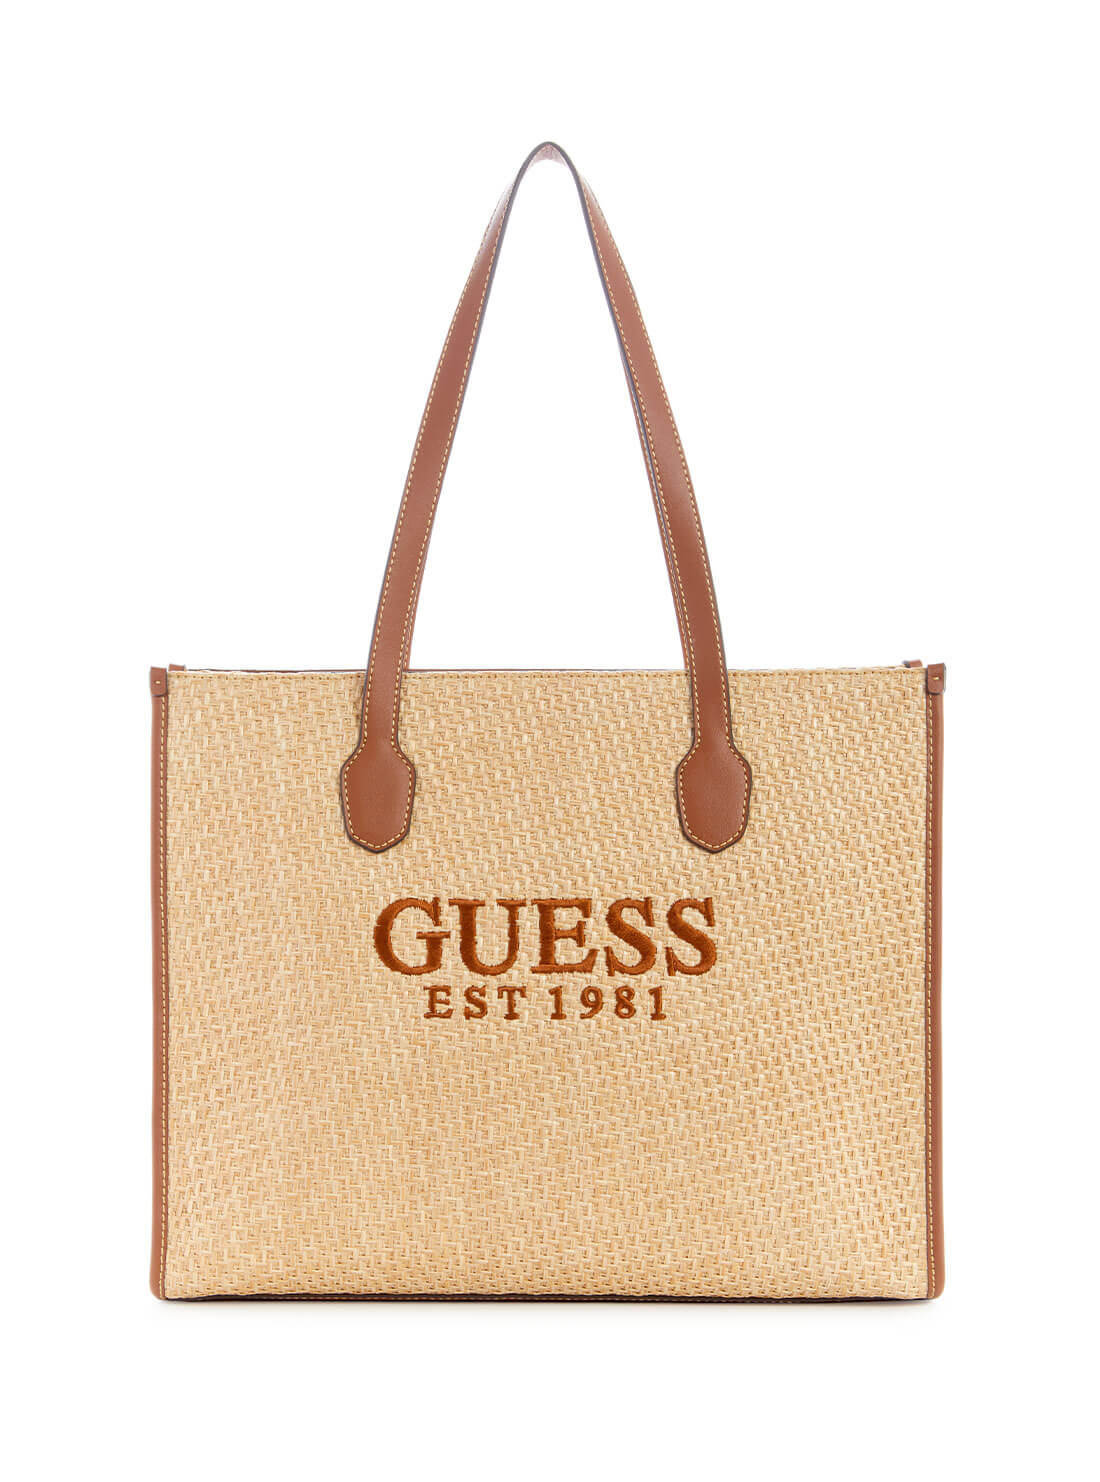 Cognac Brown and Natural Silvana Tote Bag | GUESS Women's Handbags | front view